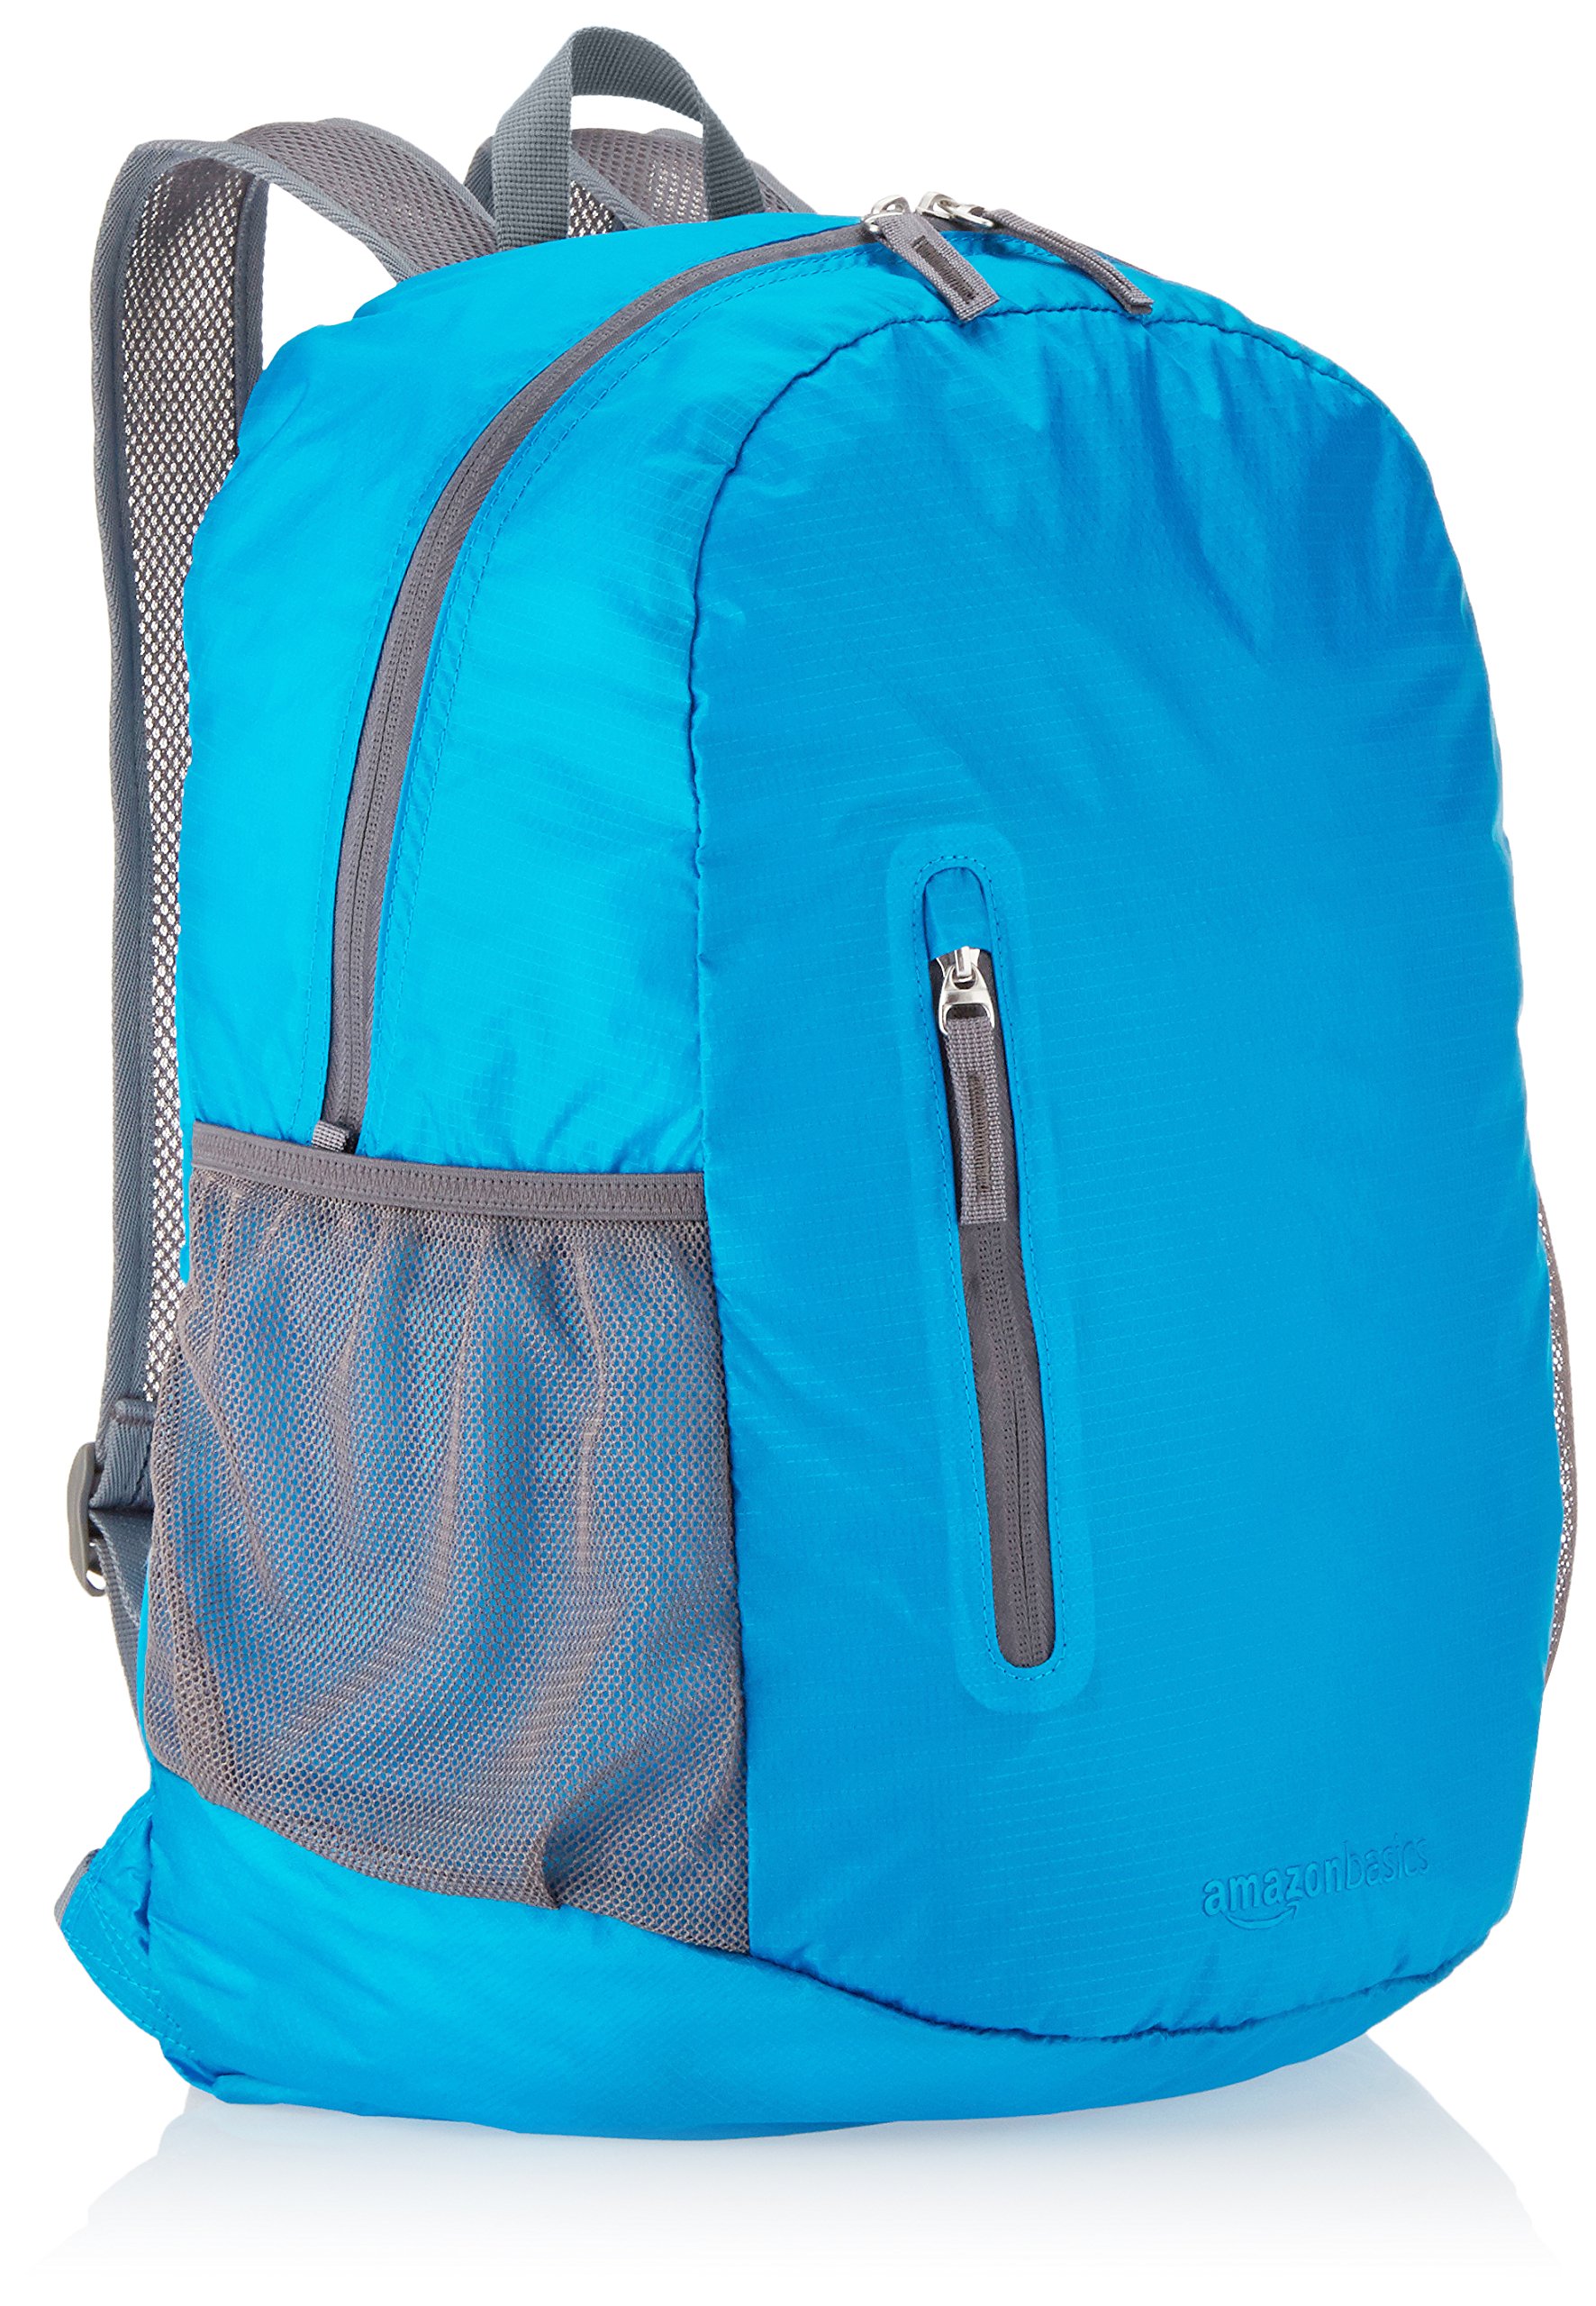 Amazon Basics Ultralight Portable Packable Day Pack 35l Light Blue